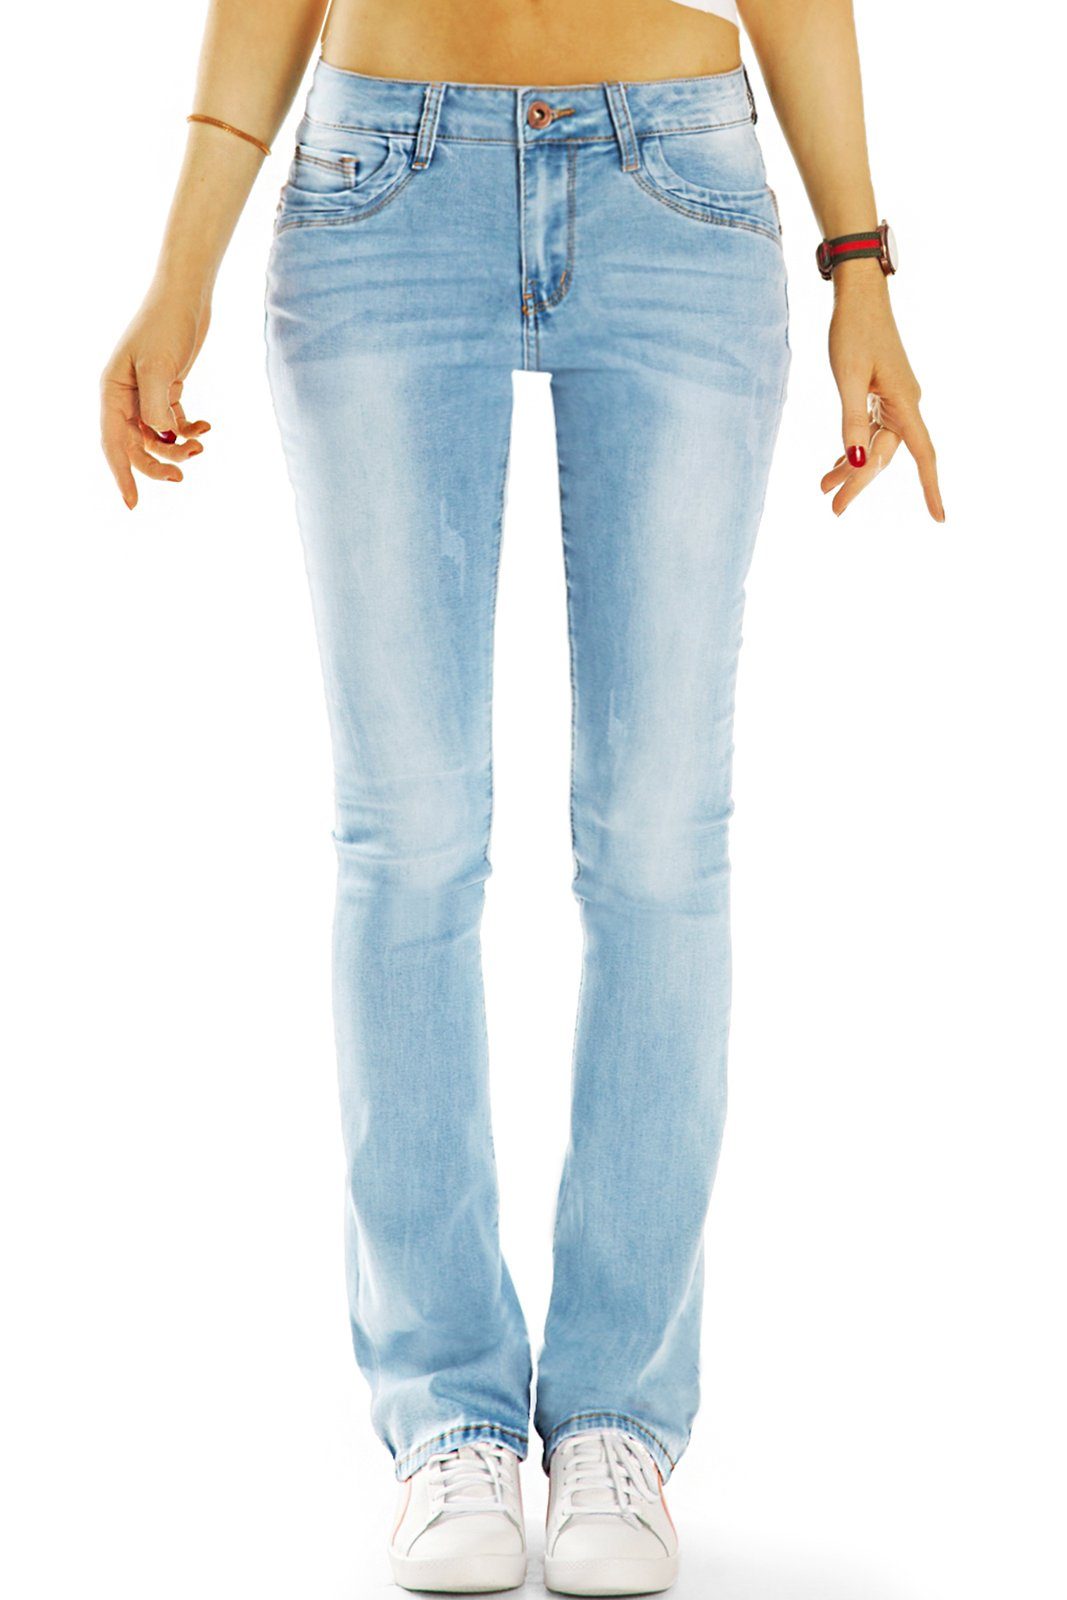 be Bootcut Jeans Hüftjeans bequeme Stretch Fit Passform Hosen Medium Waist - Damen - j22r 5-Pocket-Style